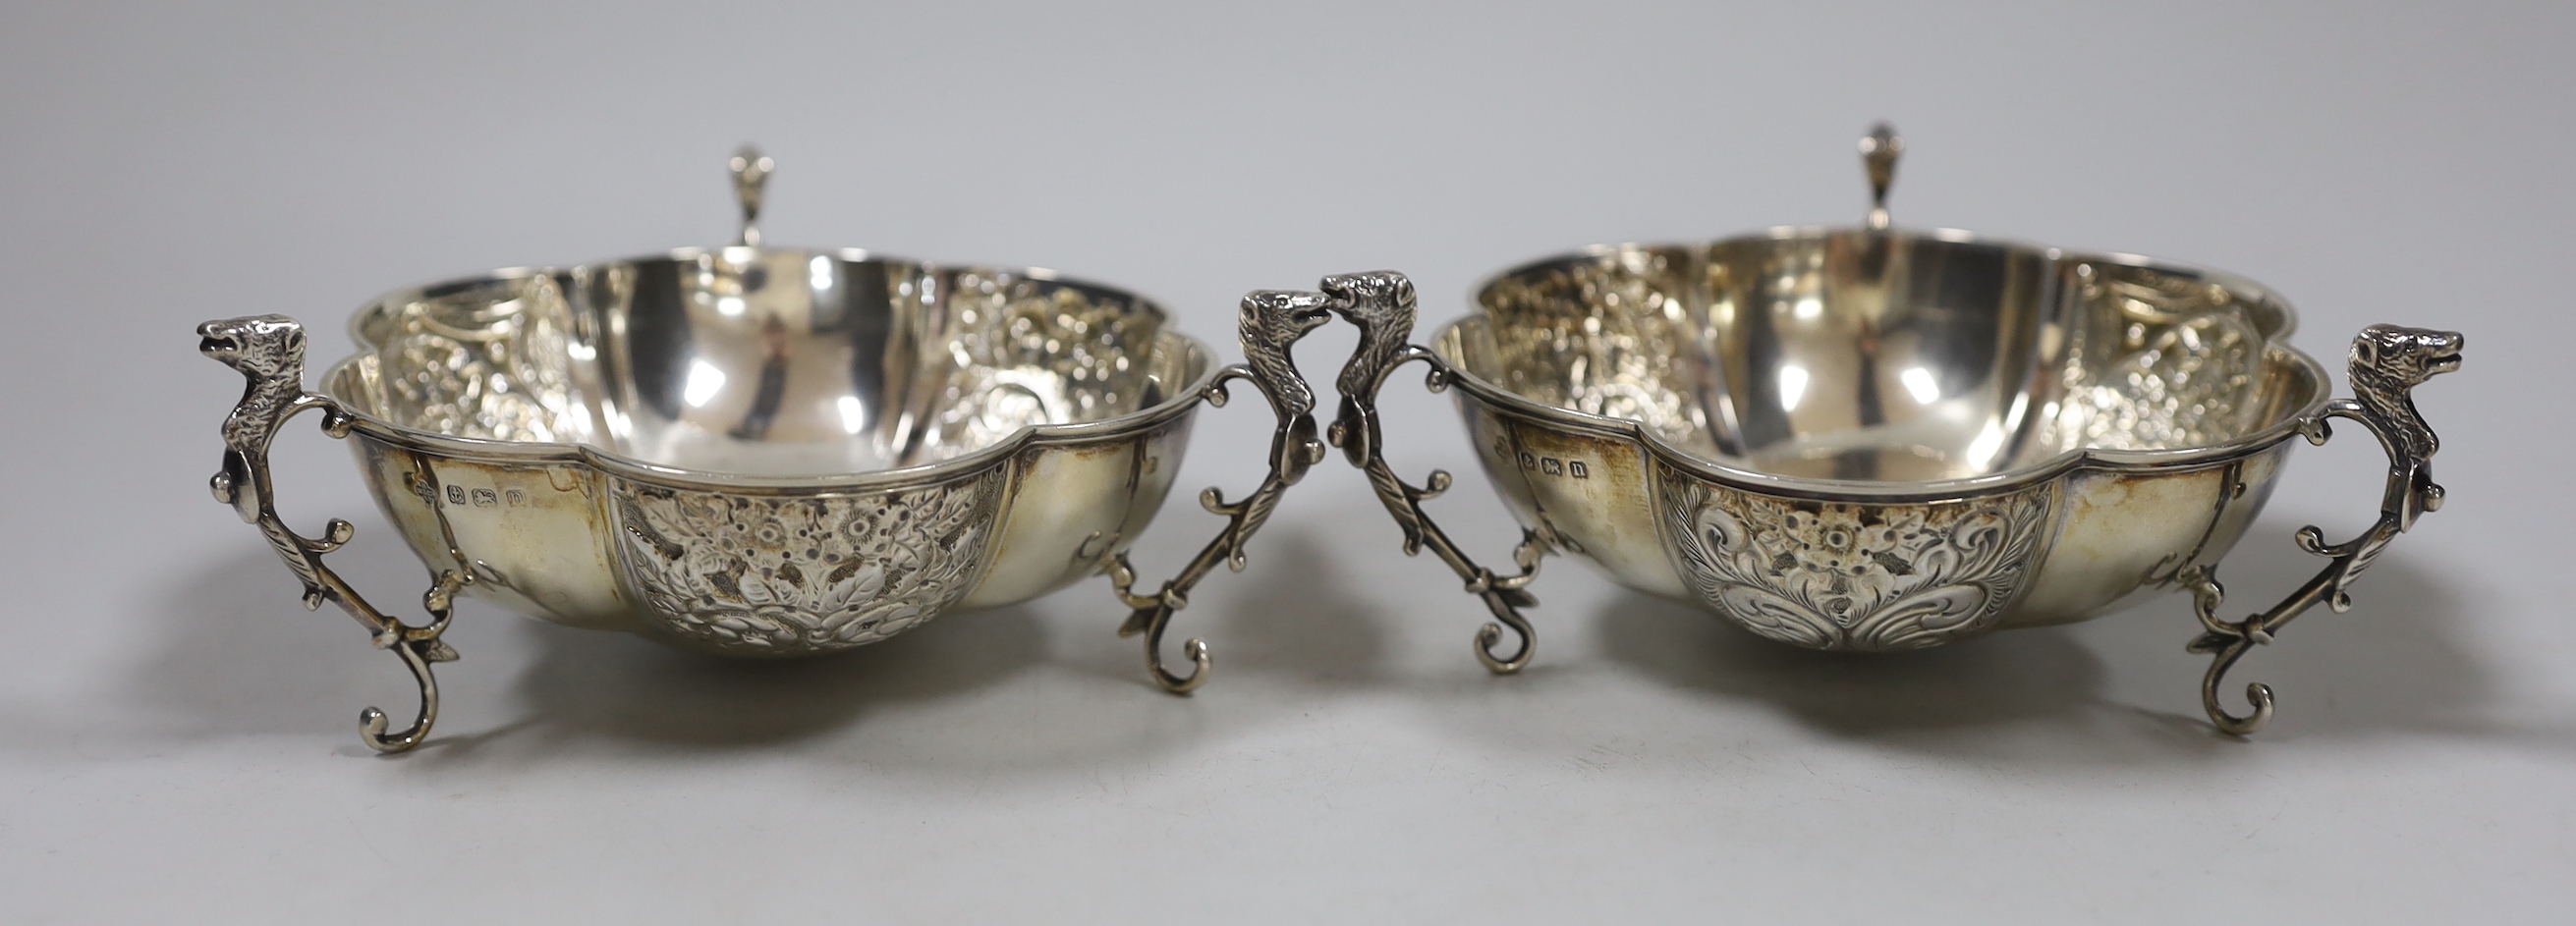 A pair of George V silver tri-handled bonbon dishes, Horace Woodward & Co Ltd, Birmingham, 1912, diameter 12.5cm, 8.4oz.                                                                                                    